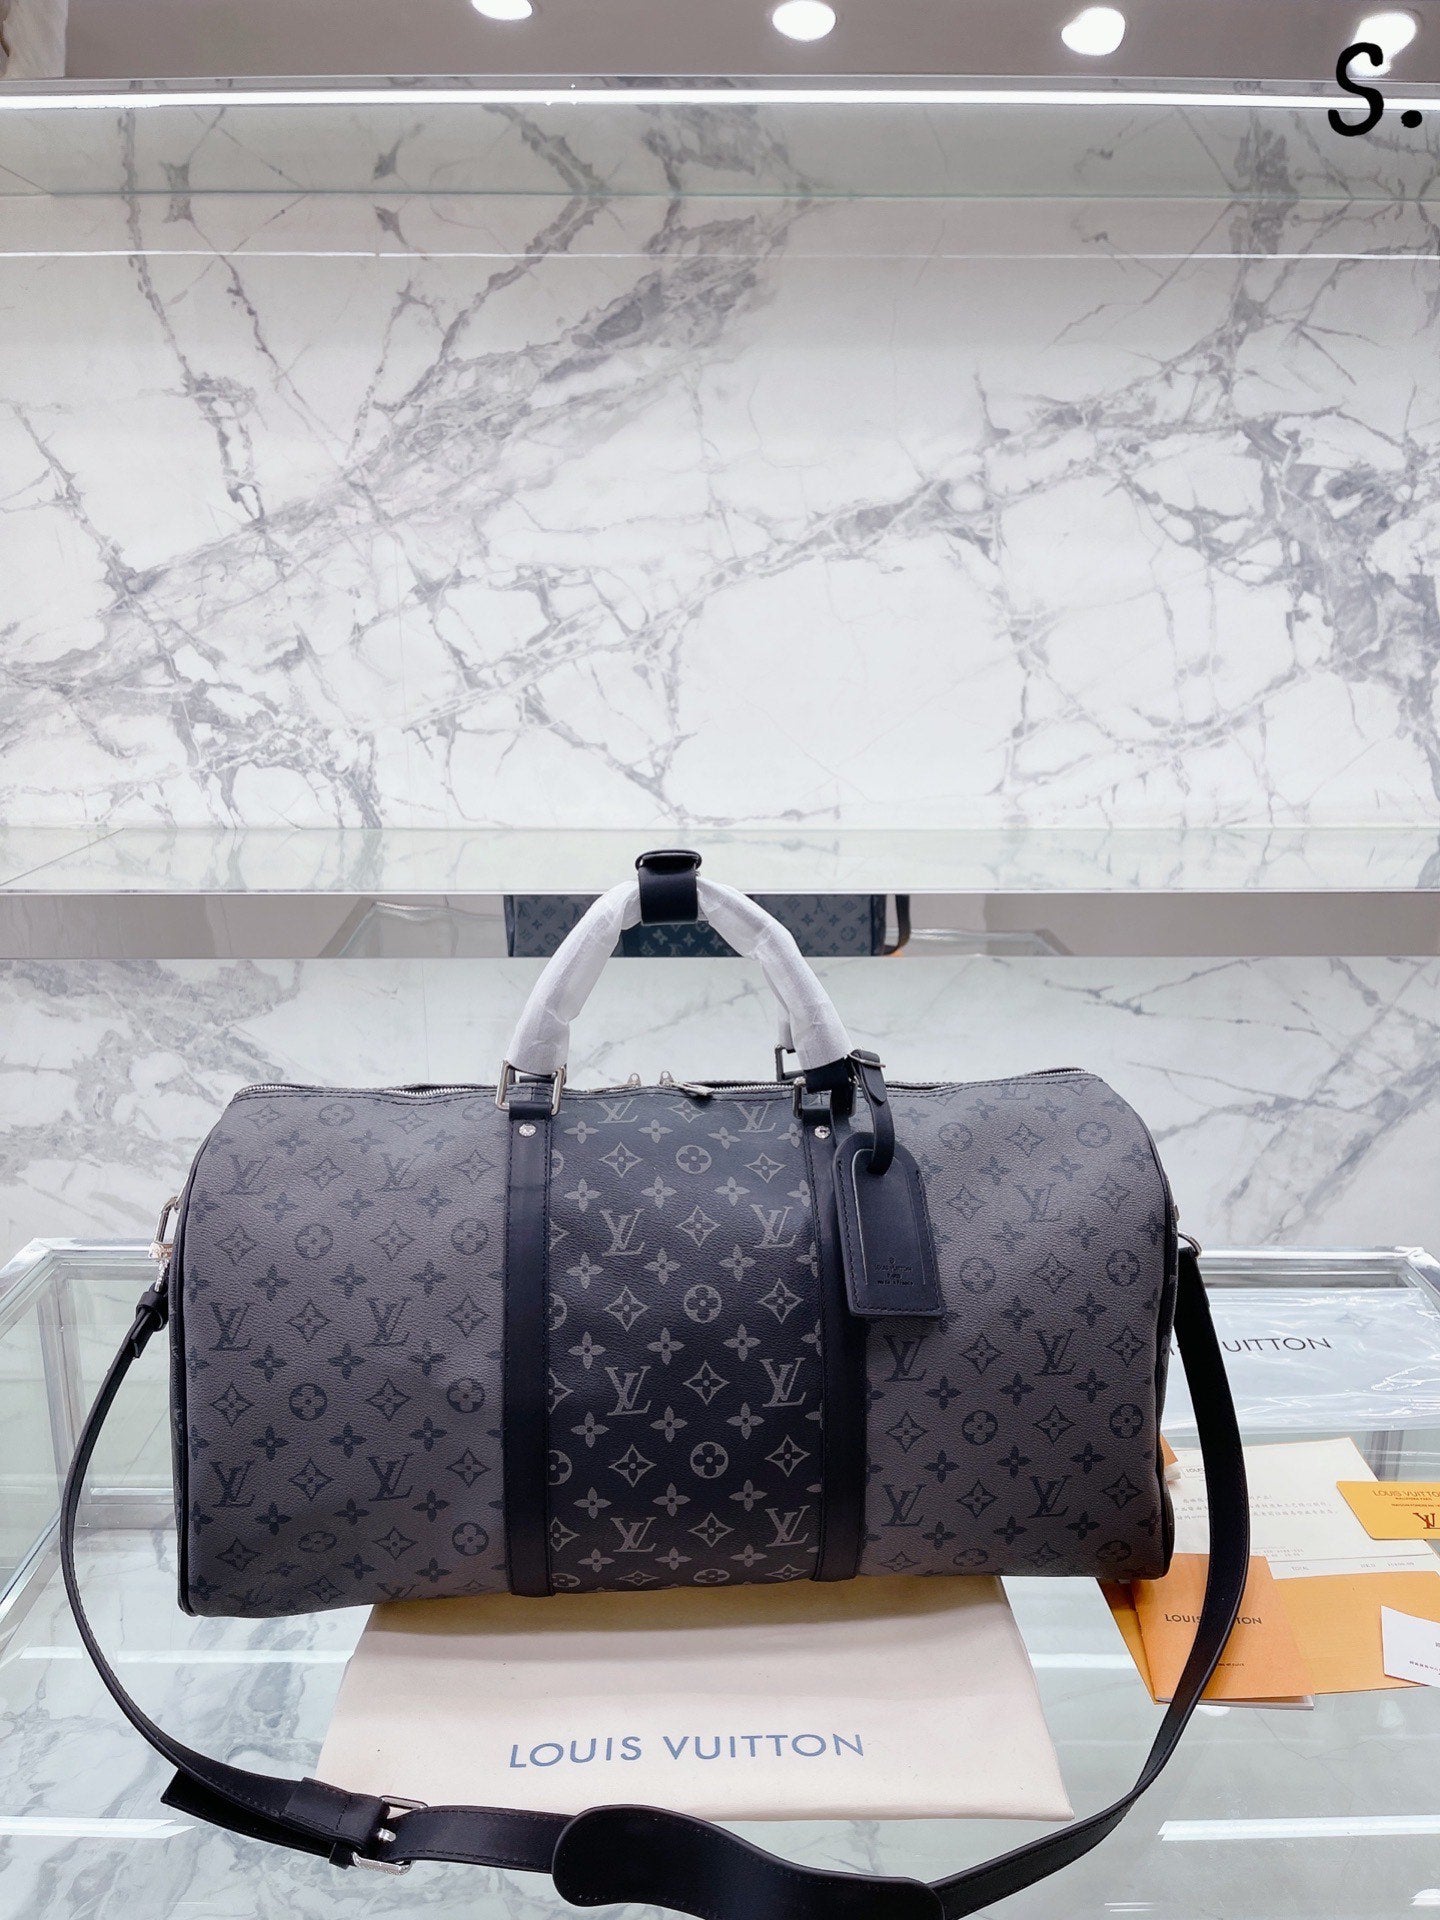 Louis Vuitton Large Capacity Portable Travel Bag Duffle Bag For 